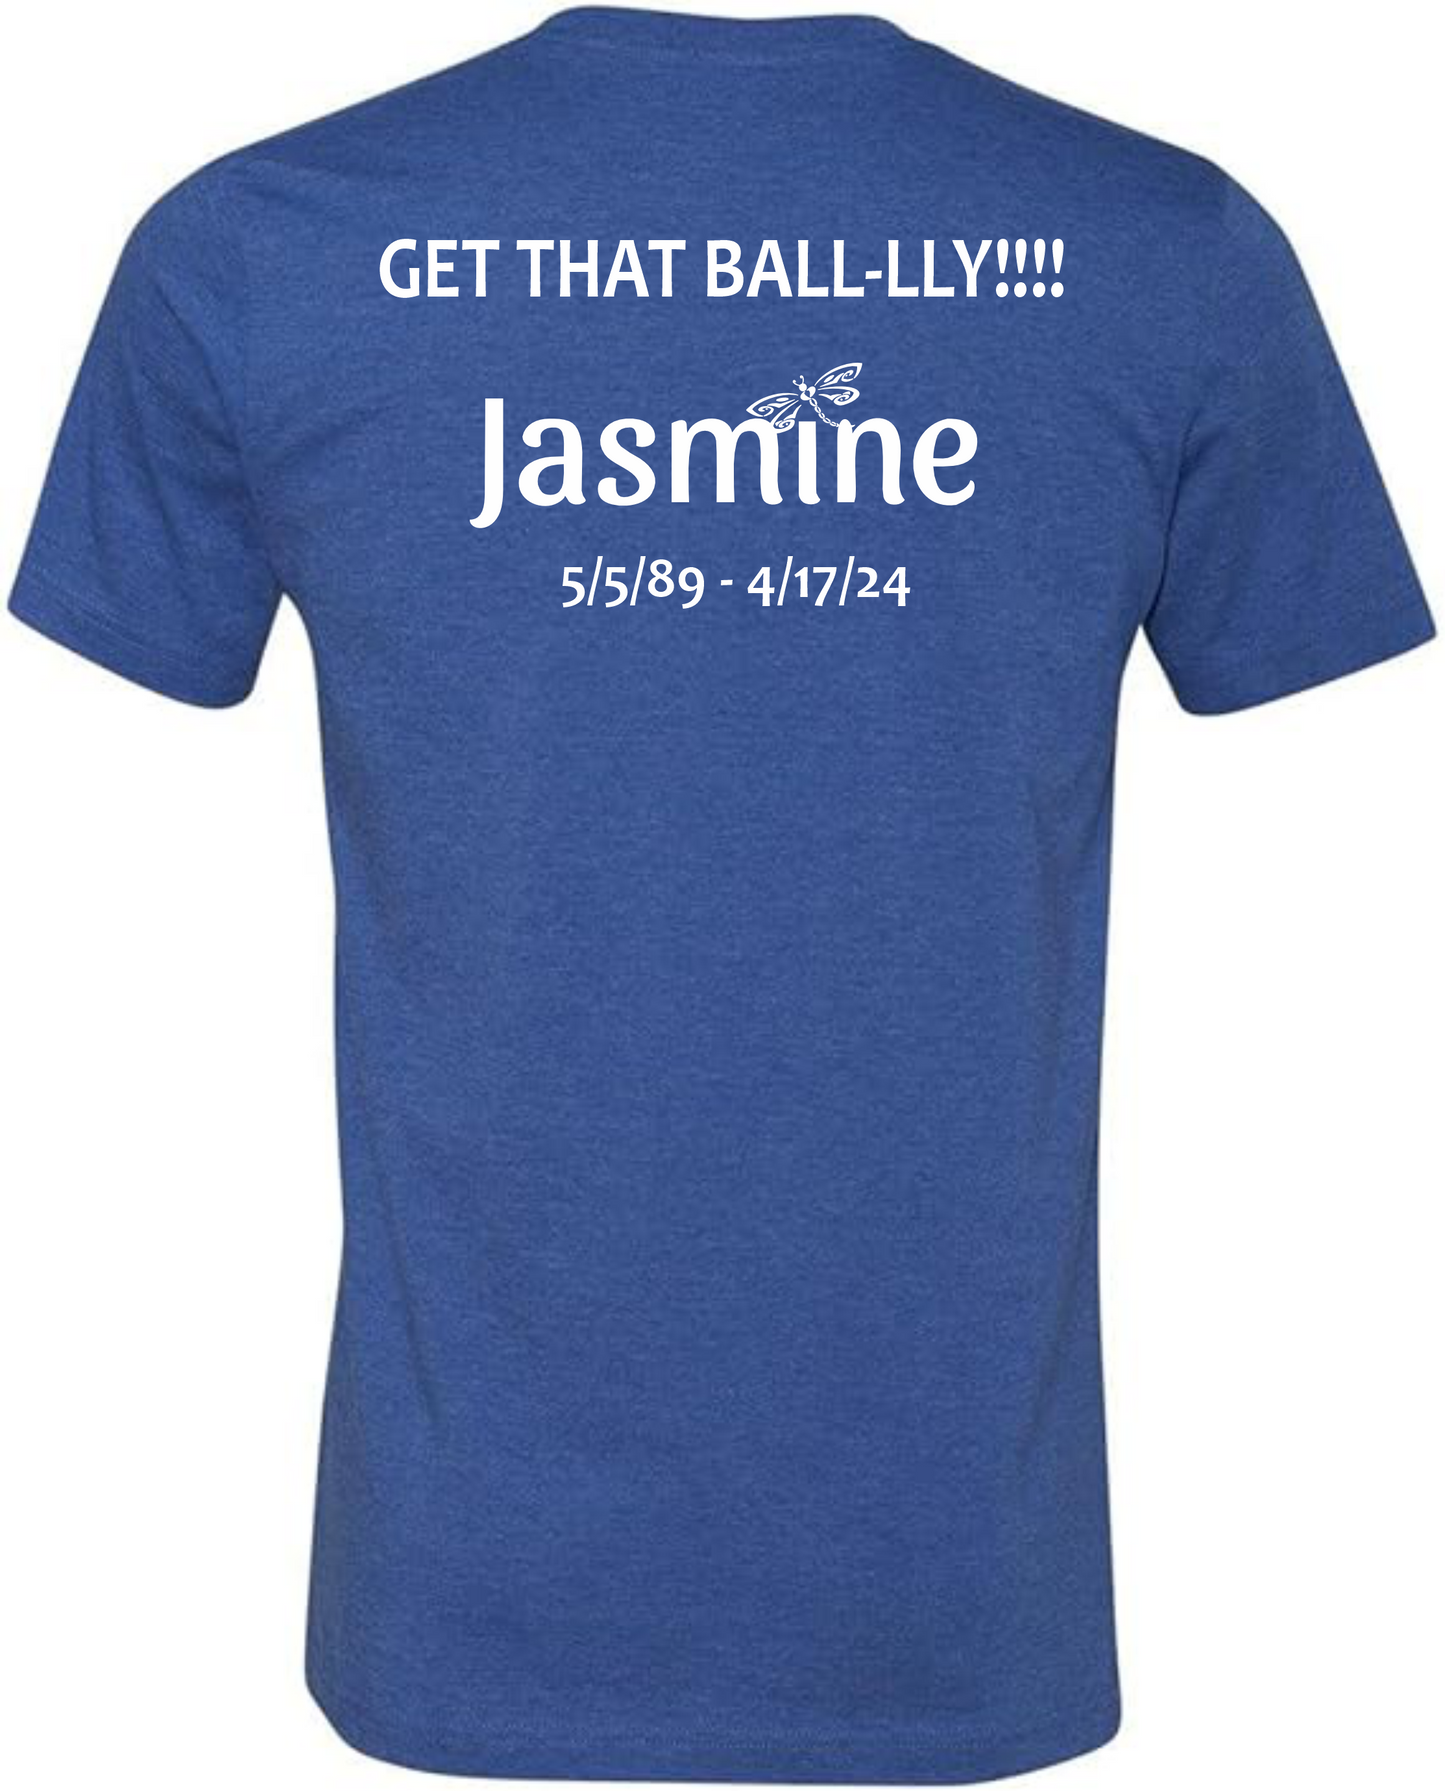 Jasmine Memorial Shirt